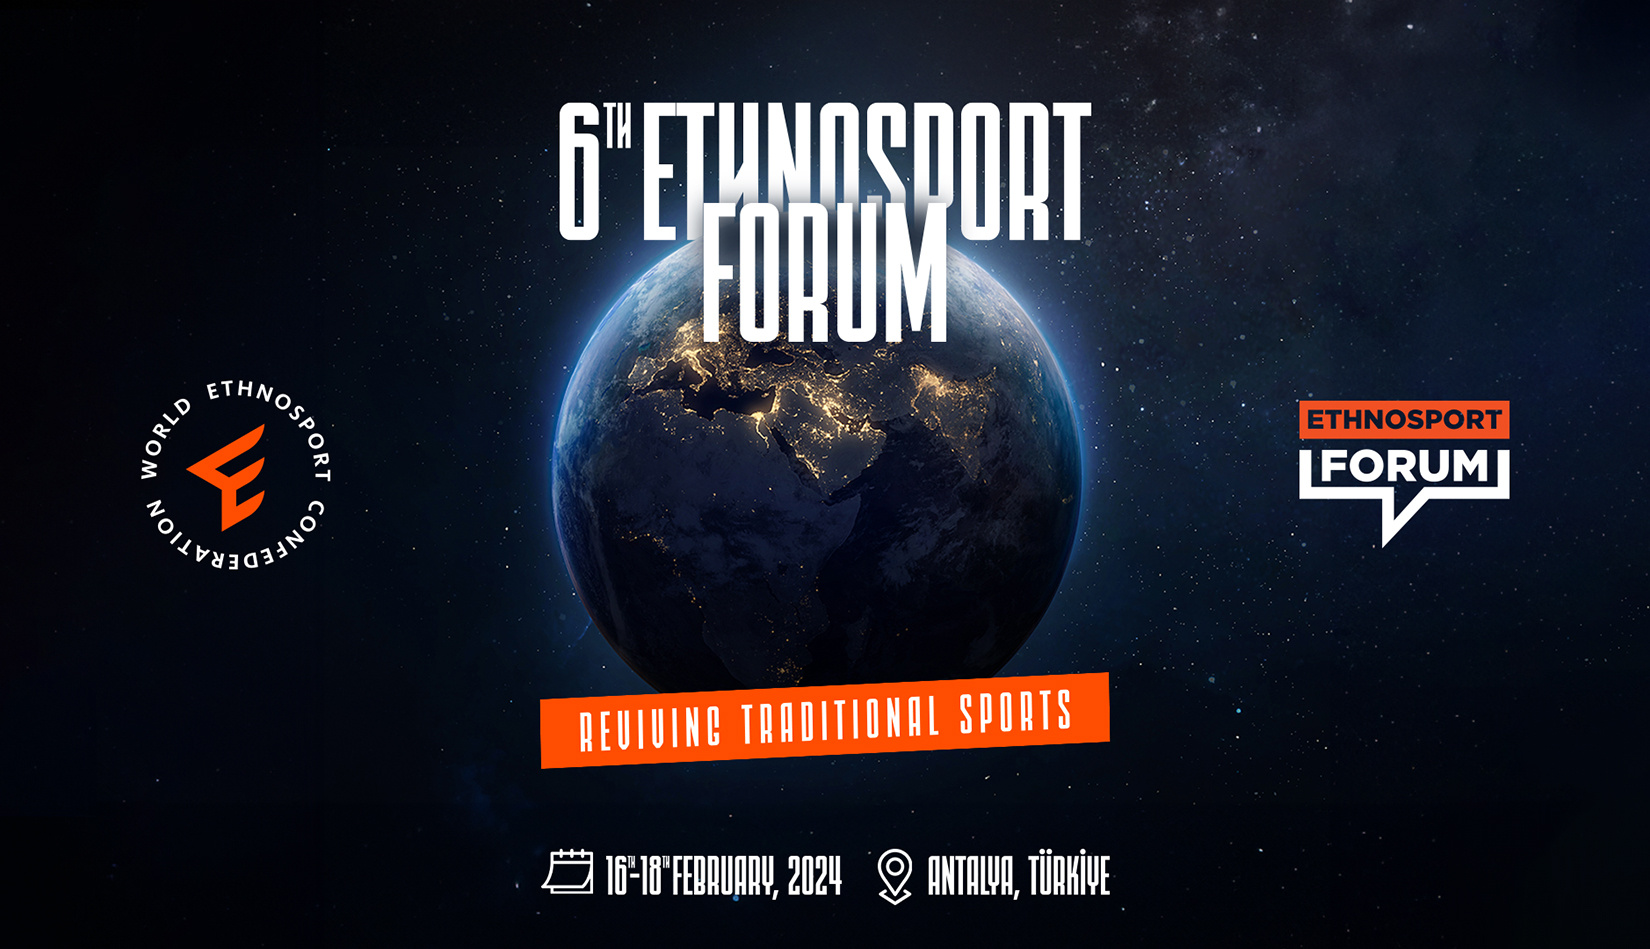 The 6th Ethnosport Forum Will Be Held in Antalya